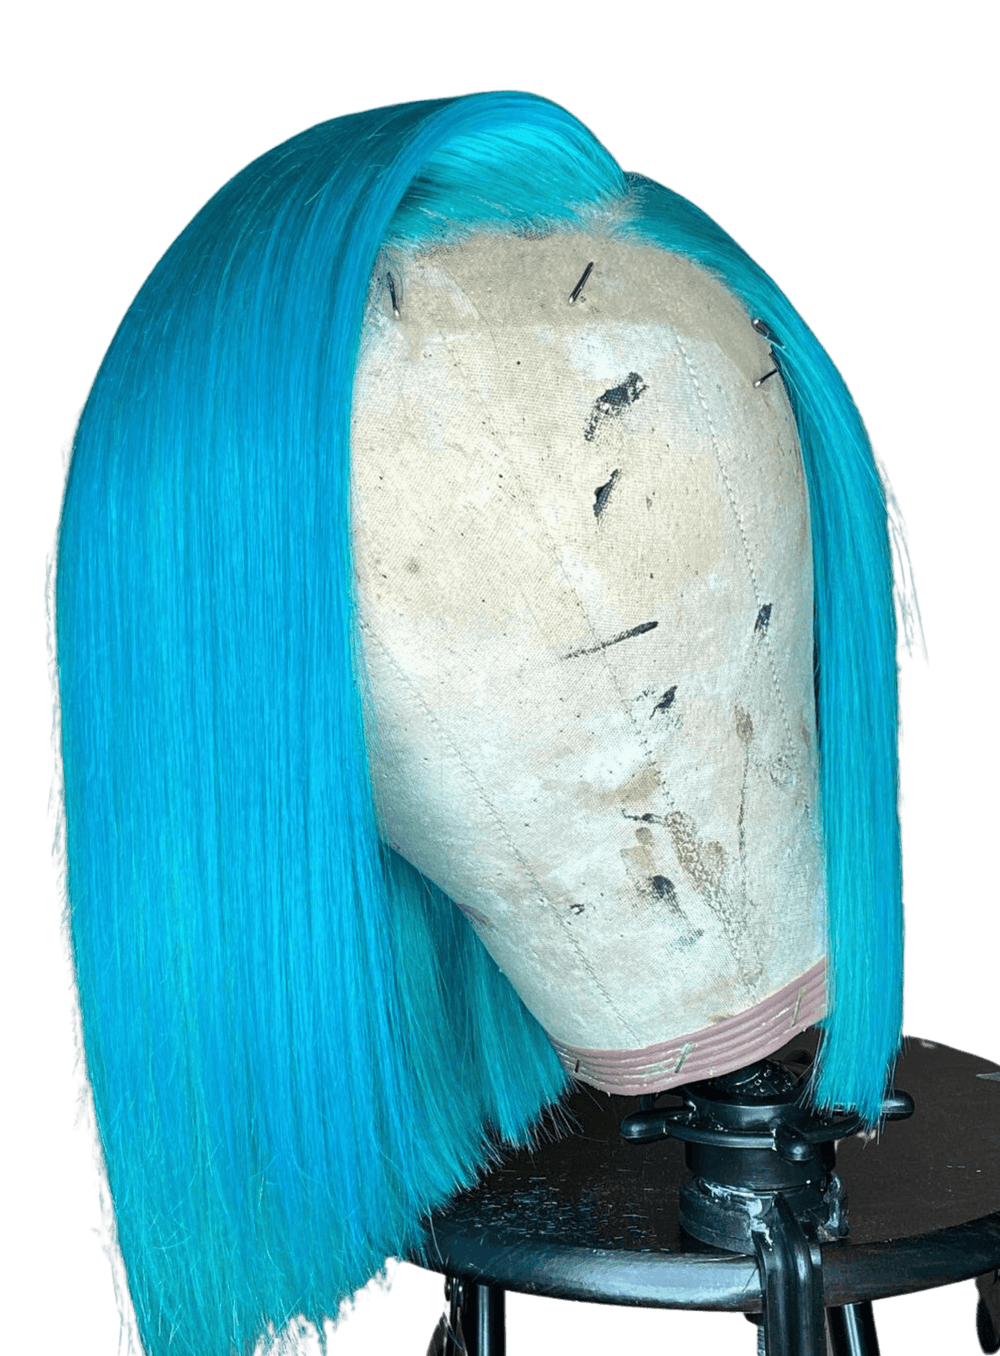 Blue BoB Lace Wig - Lengths By Rihze' Qire